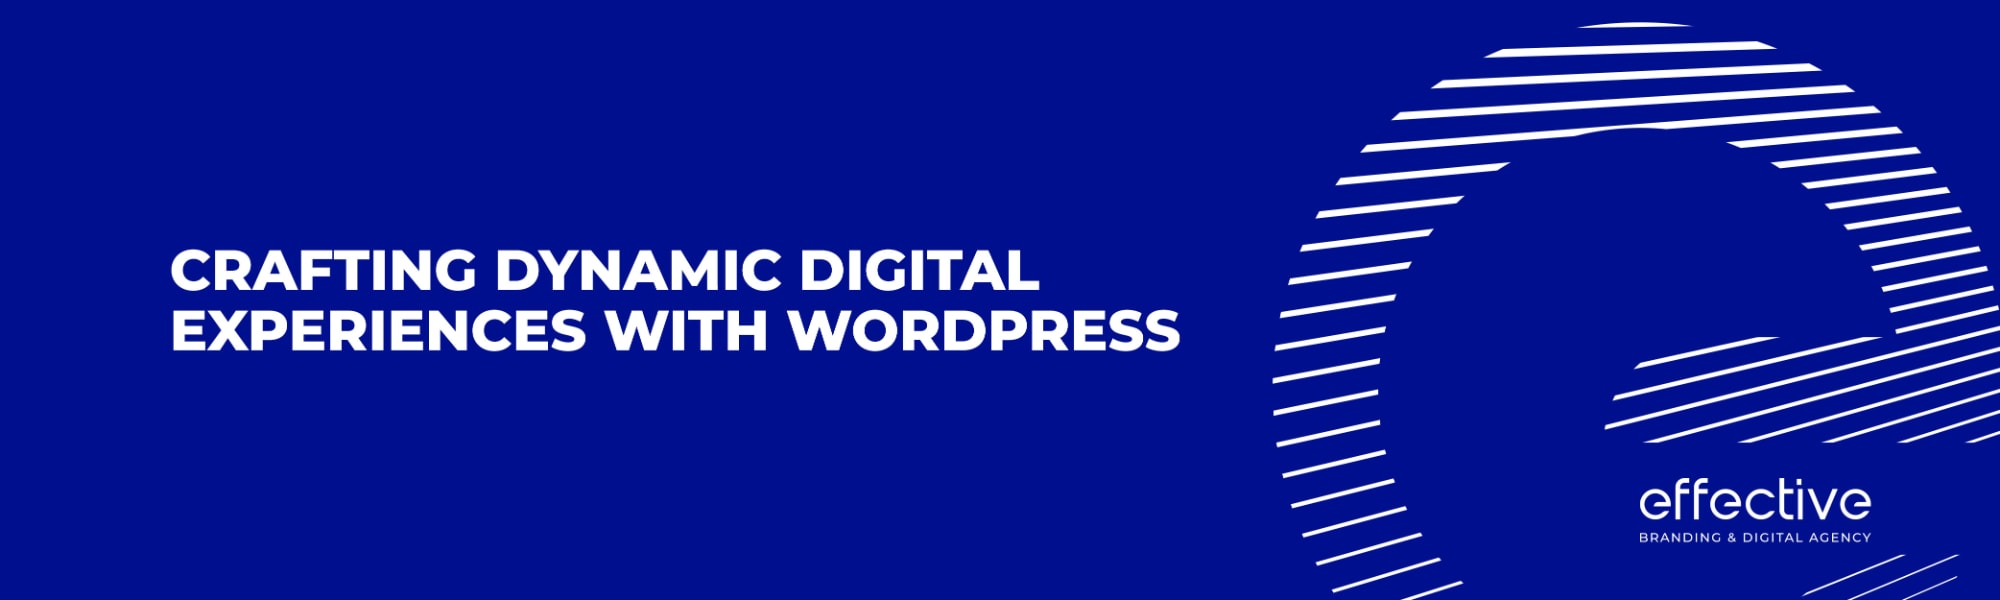 Crafting Dynamic Digital Experiences with WordPress